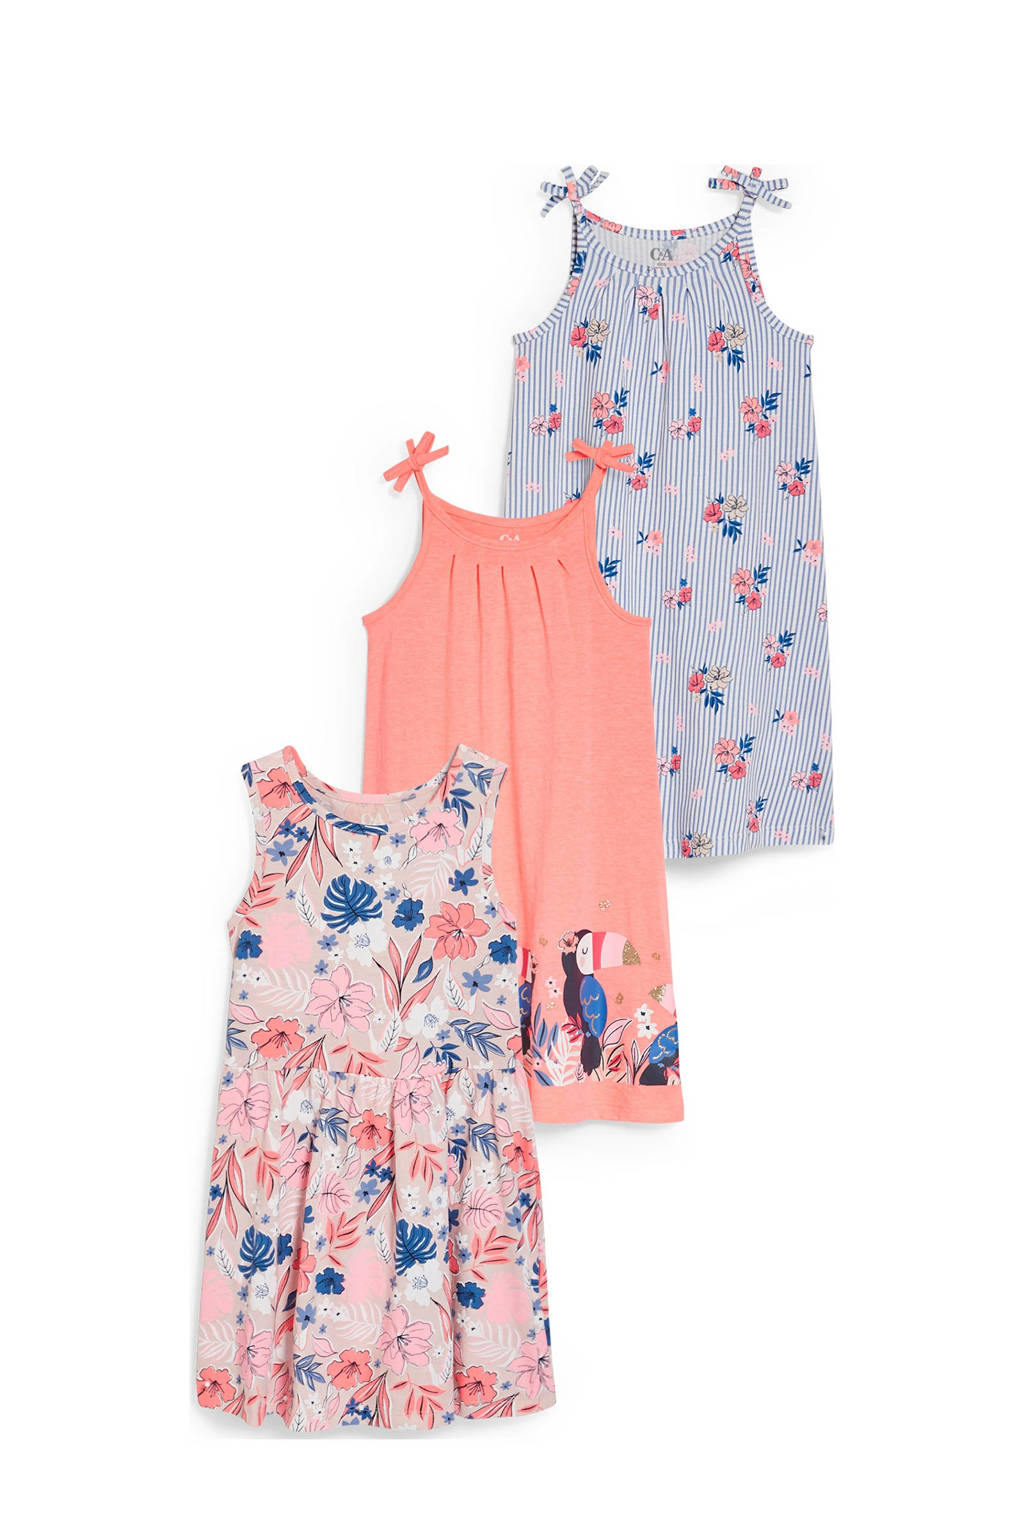 C&A jurk - set van 3 zalm/roze/blauw